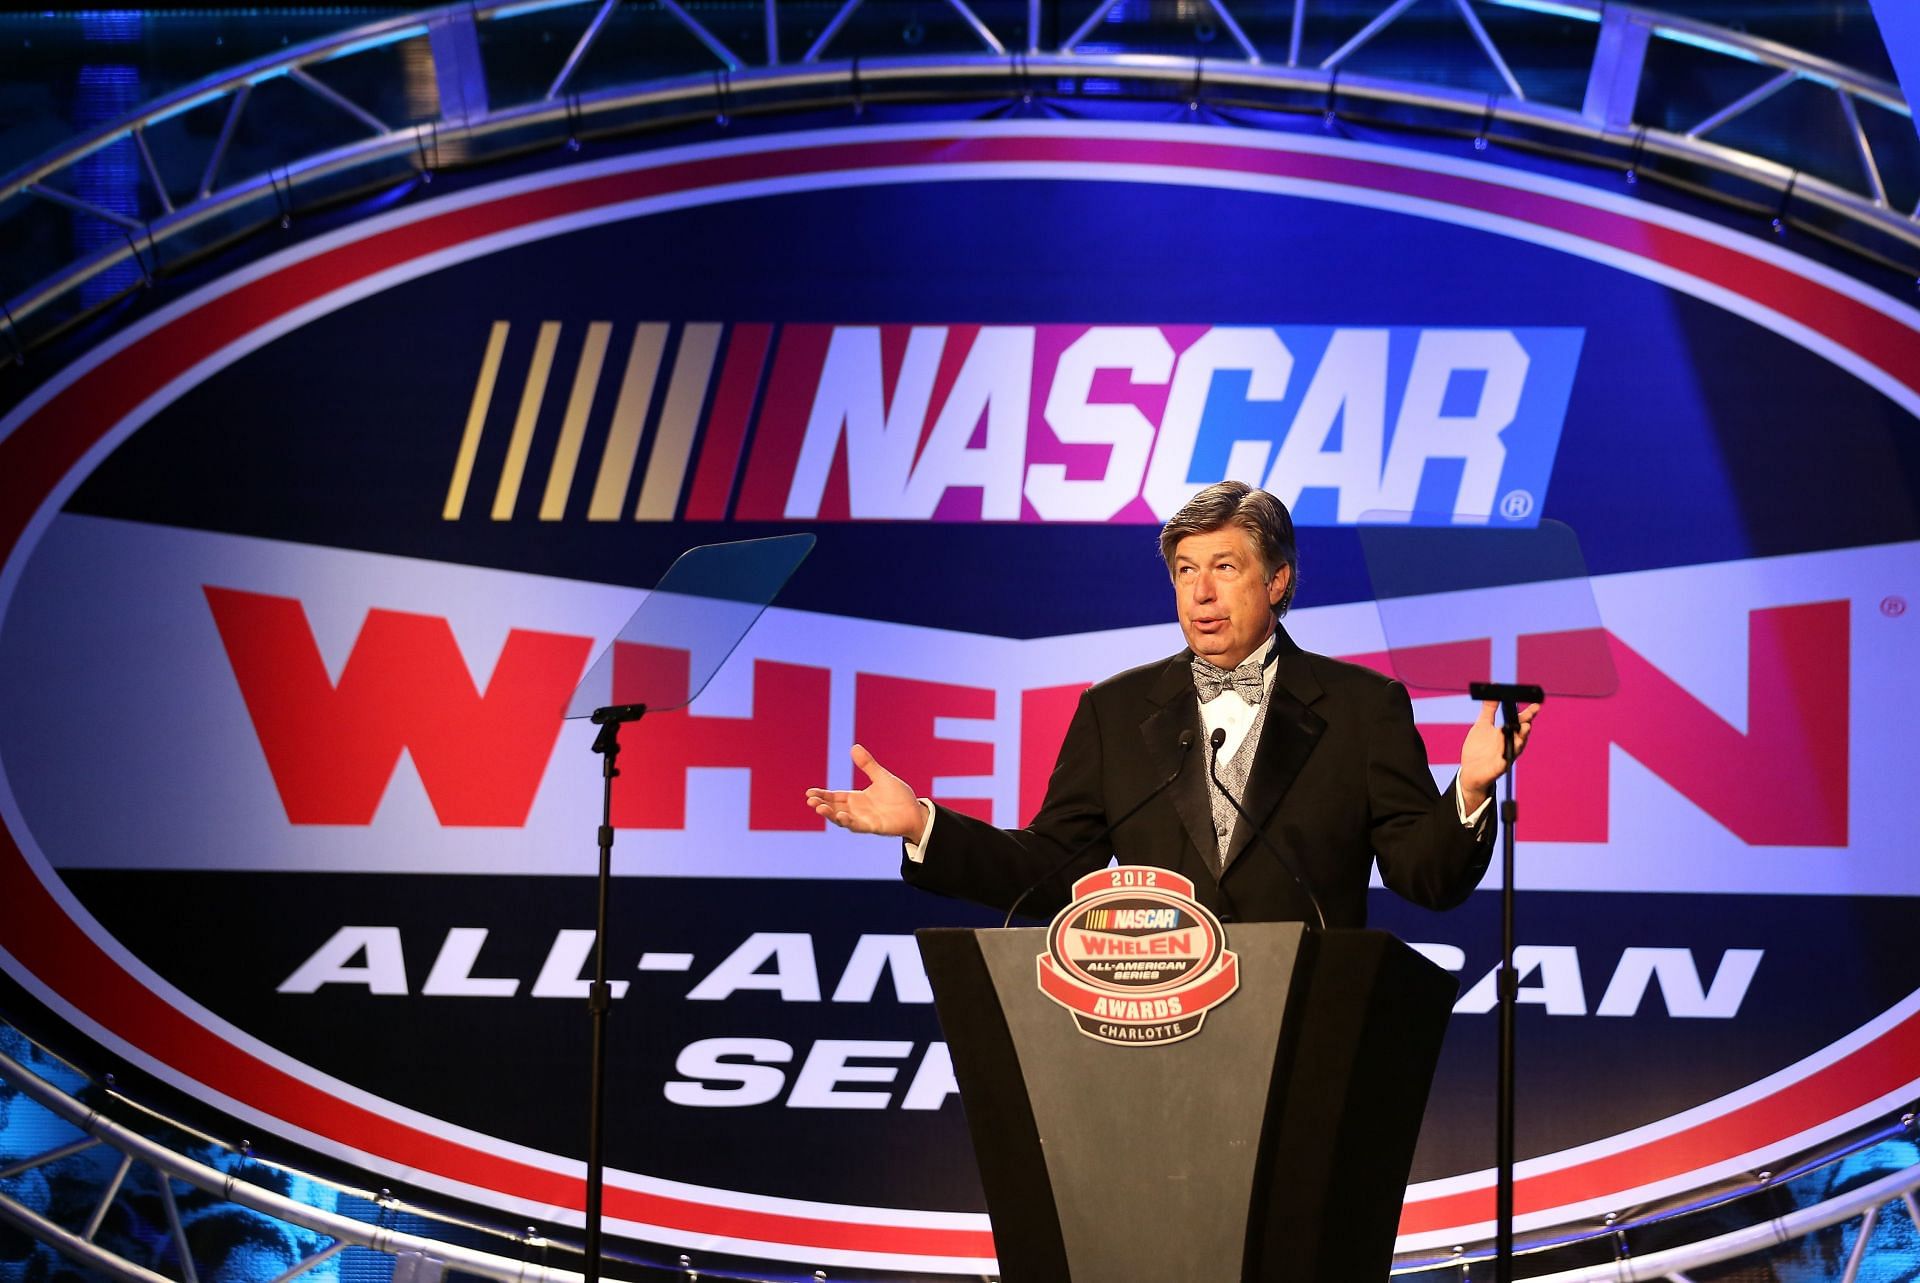 NASCAR Whelen All-American Series Awards